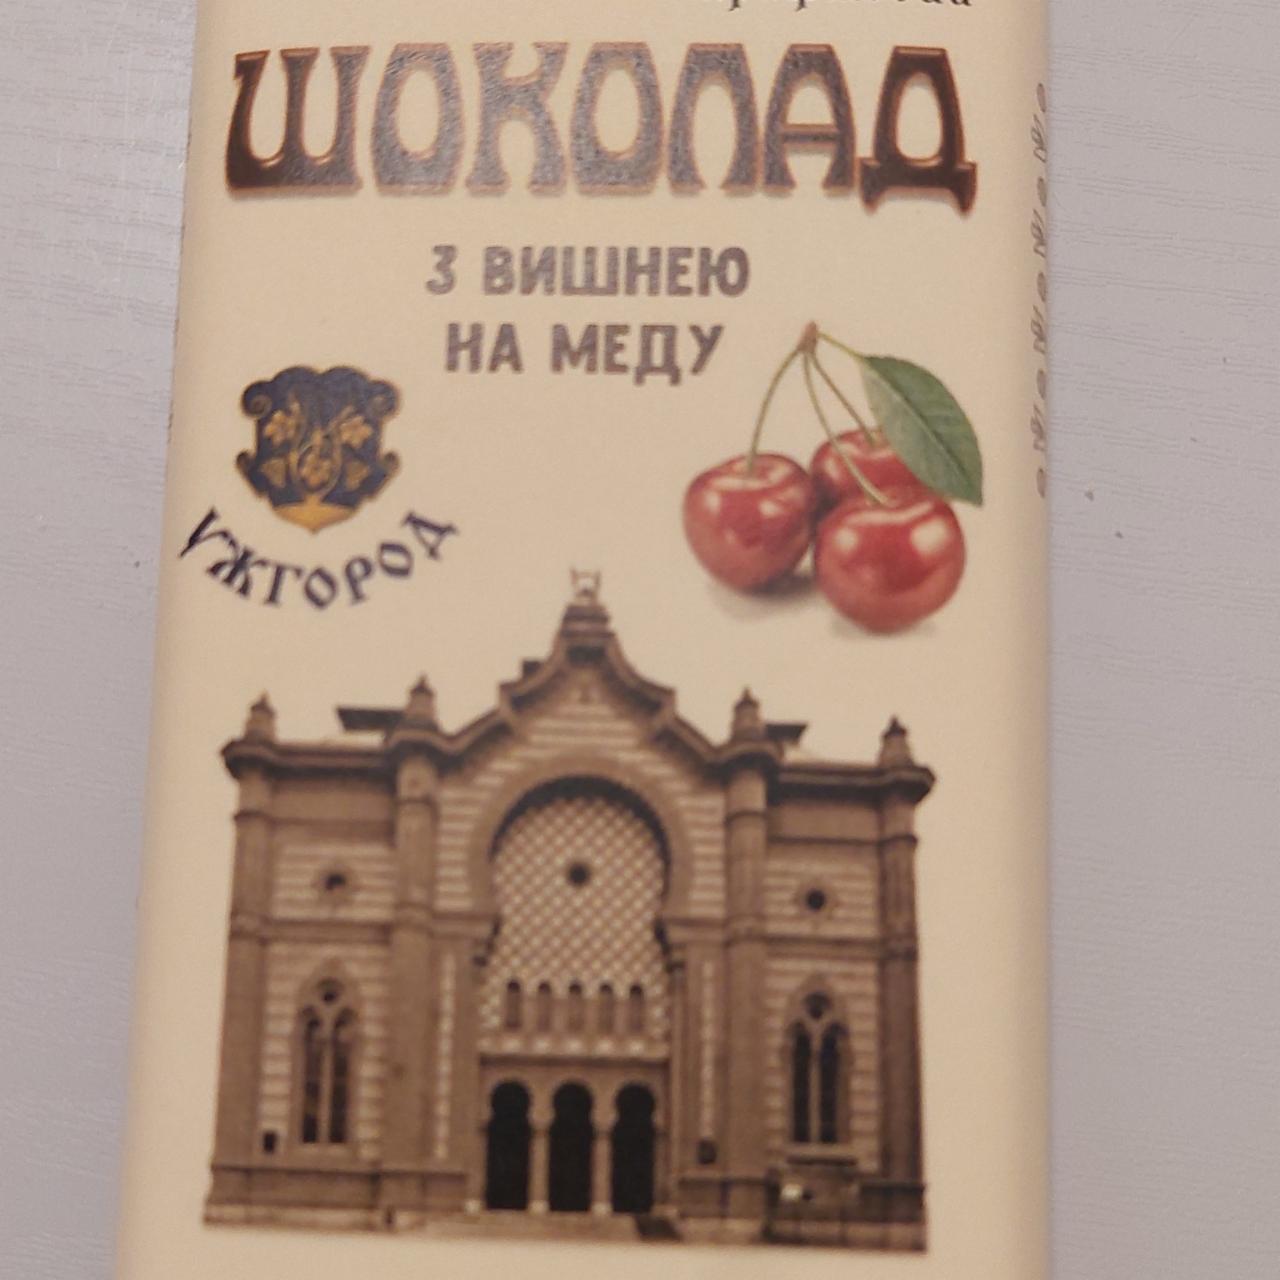 Фото - Шоколад з вишнею на меду Закарпатський